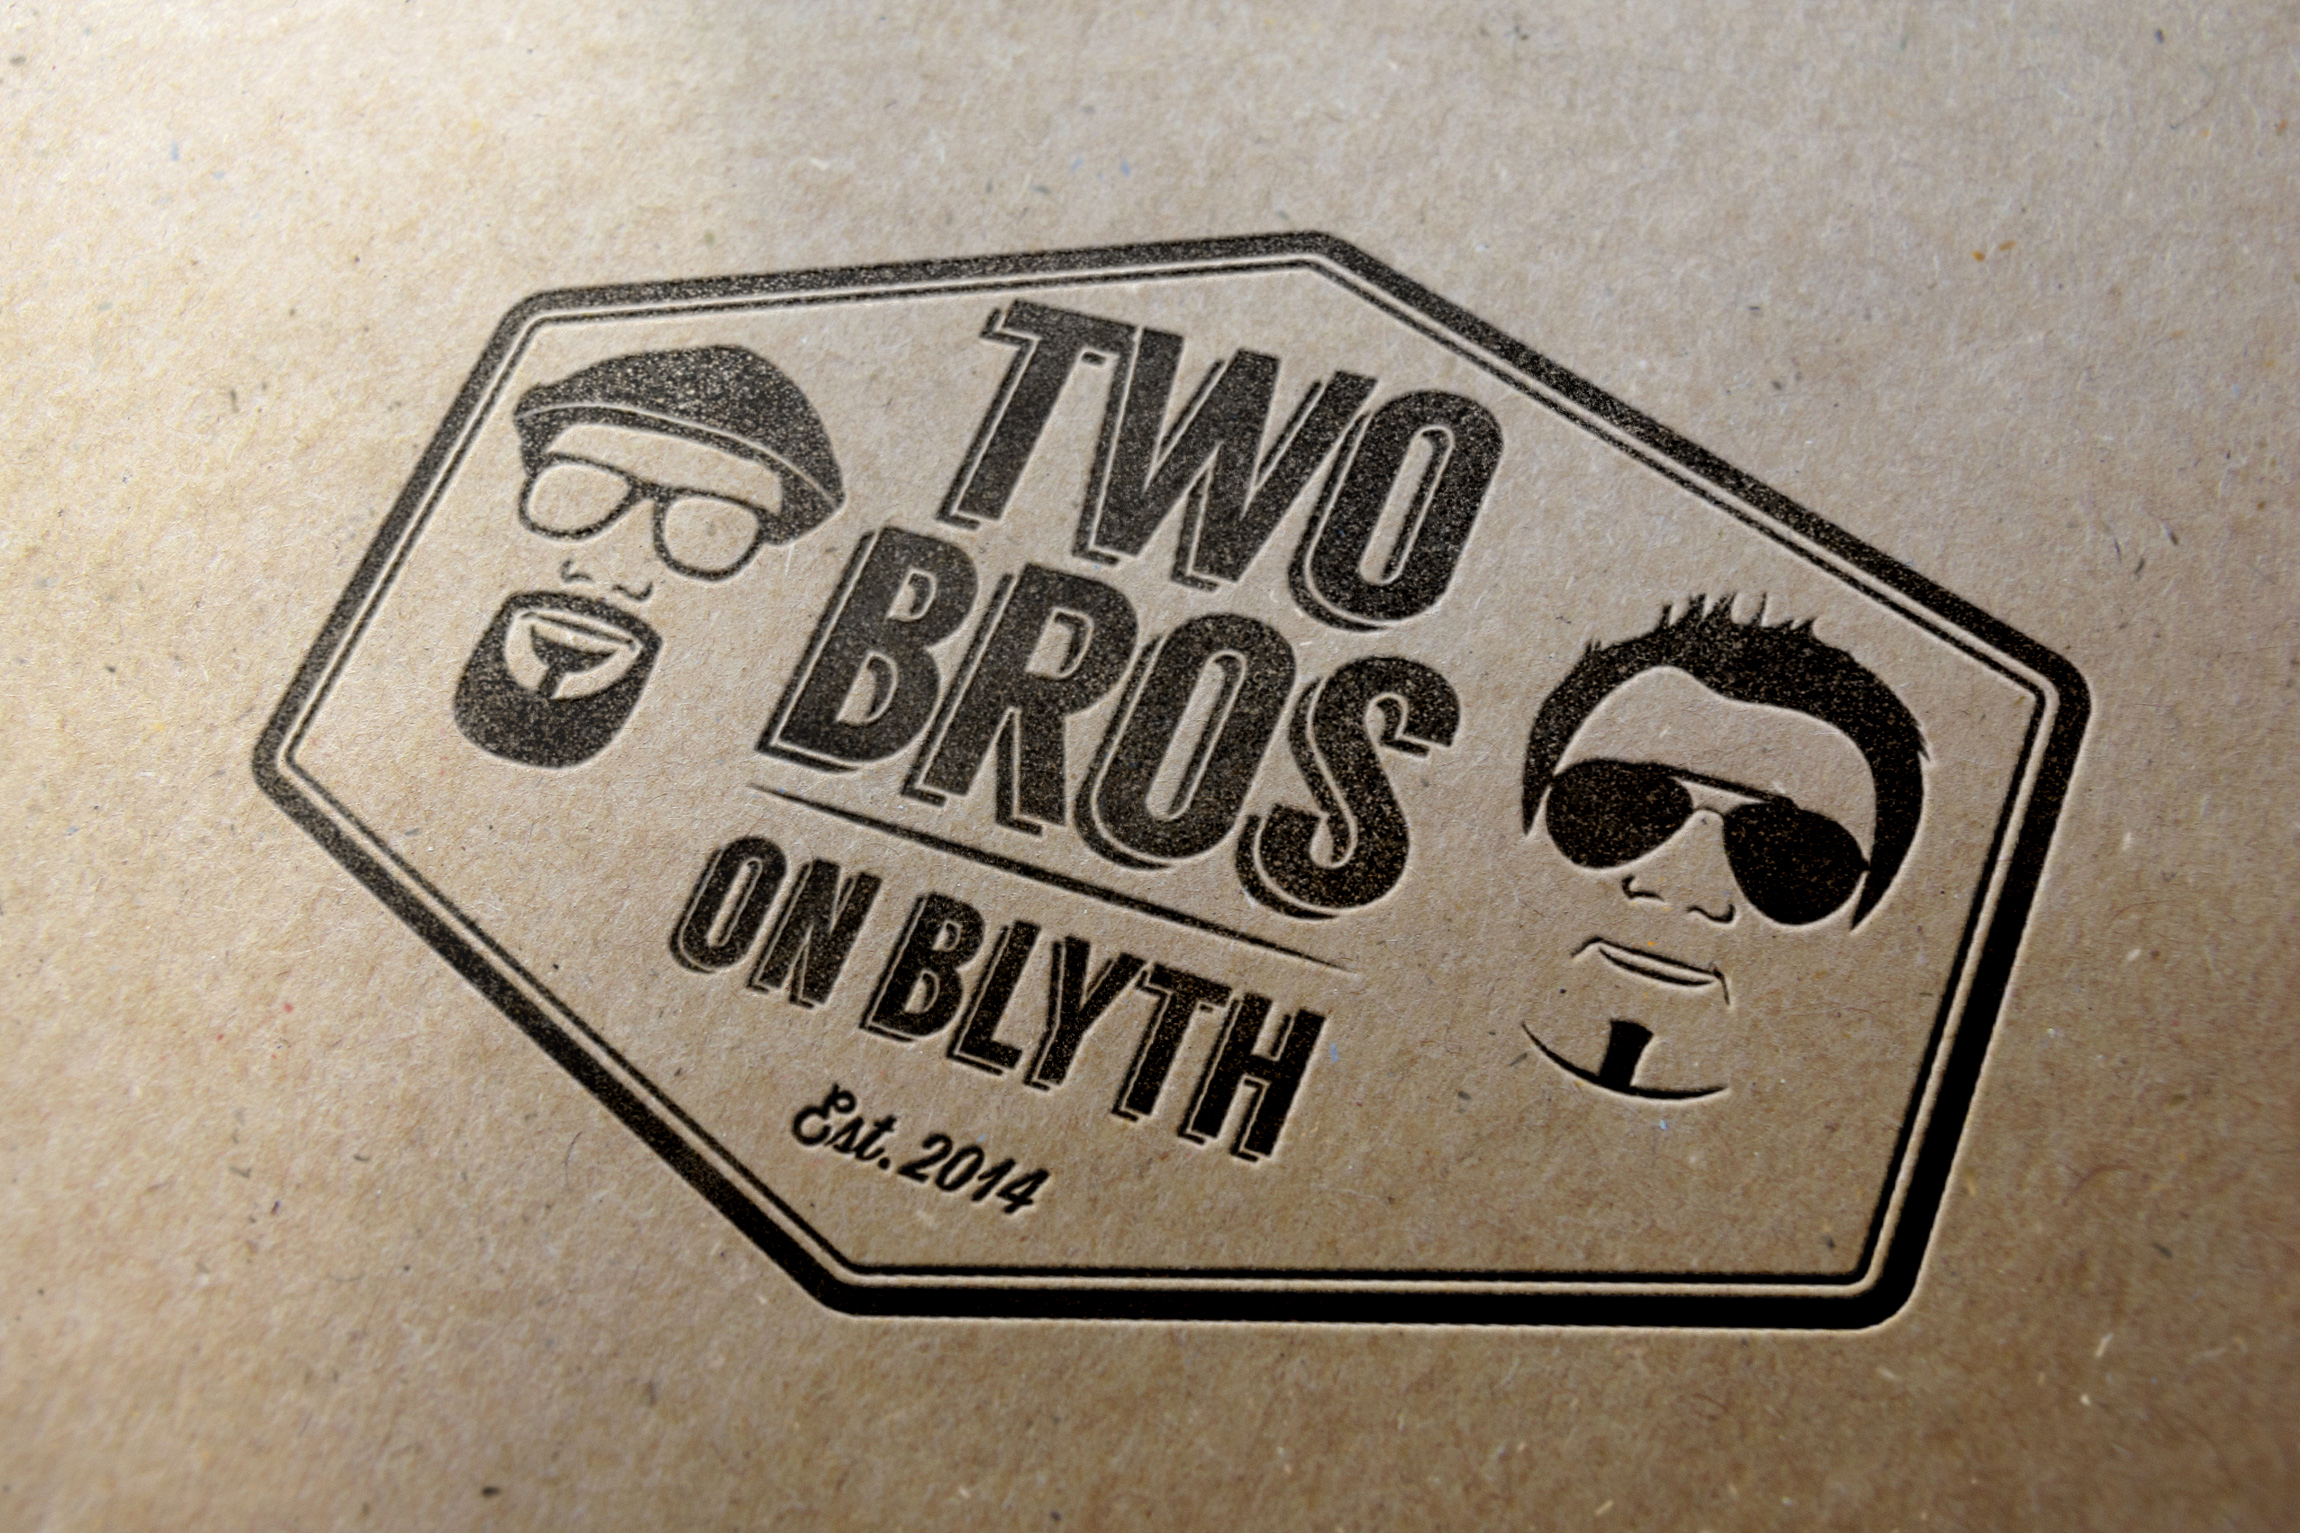 Two Bros on Blyth